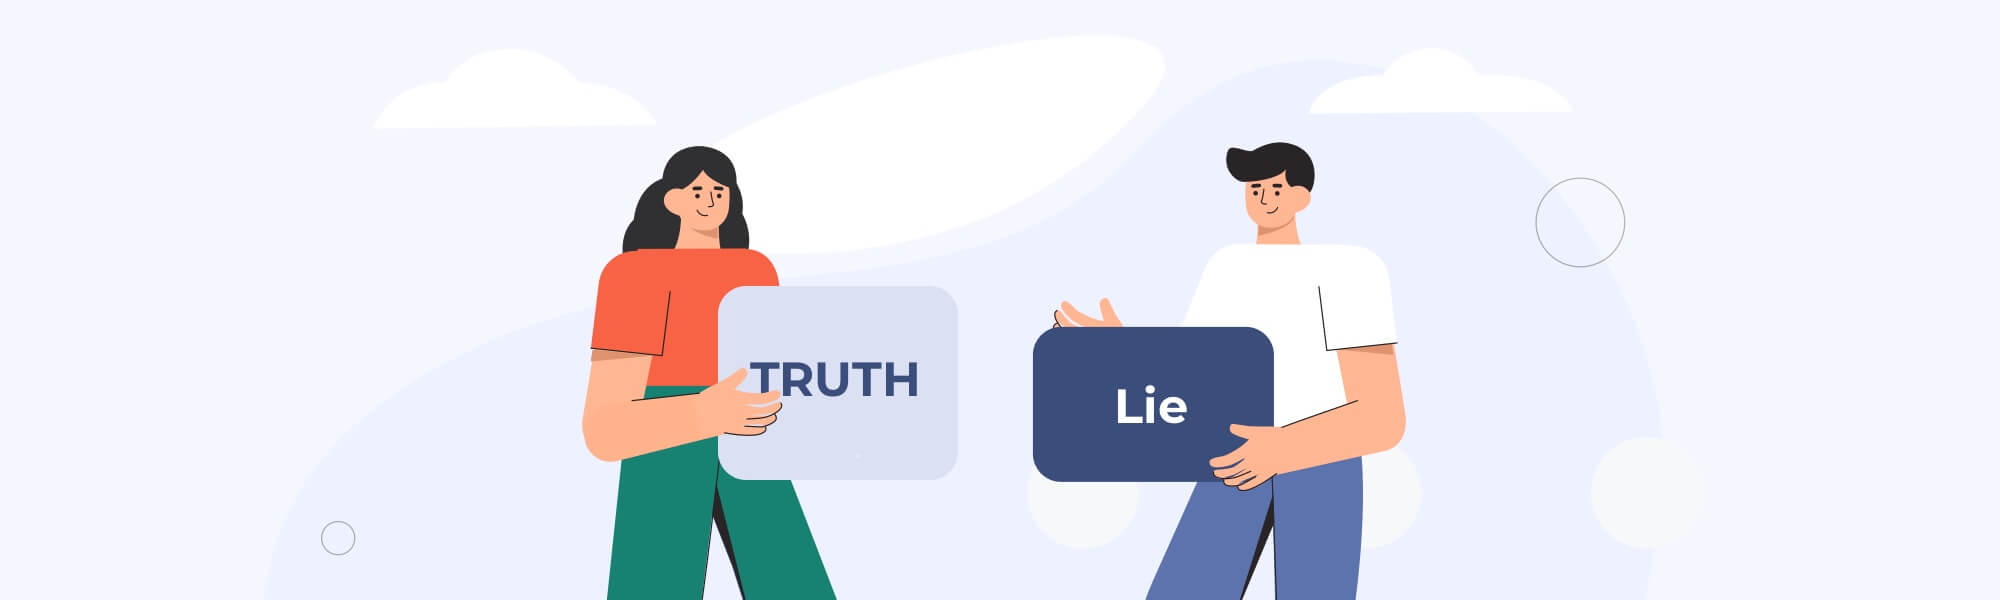 Truth or lie online activity